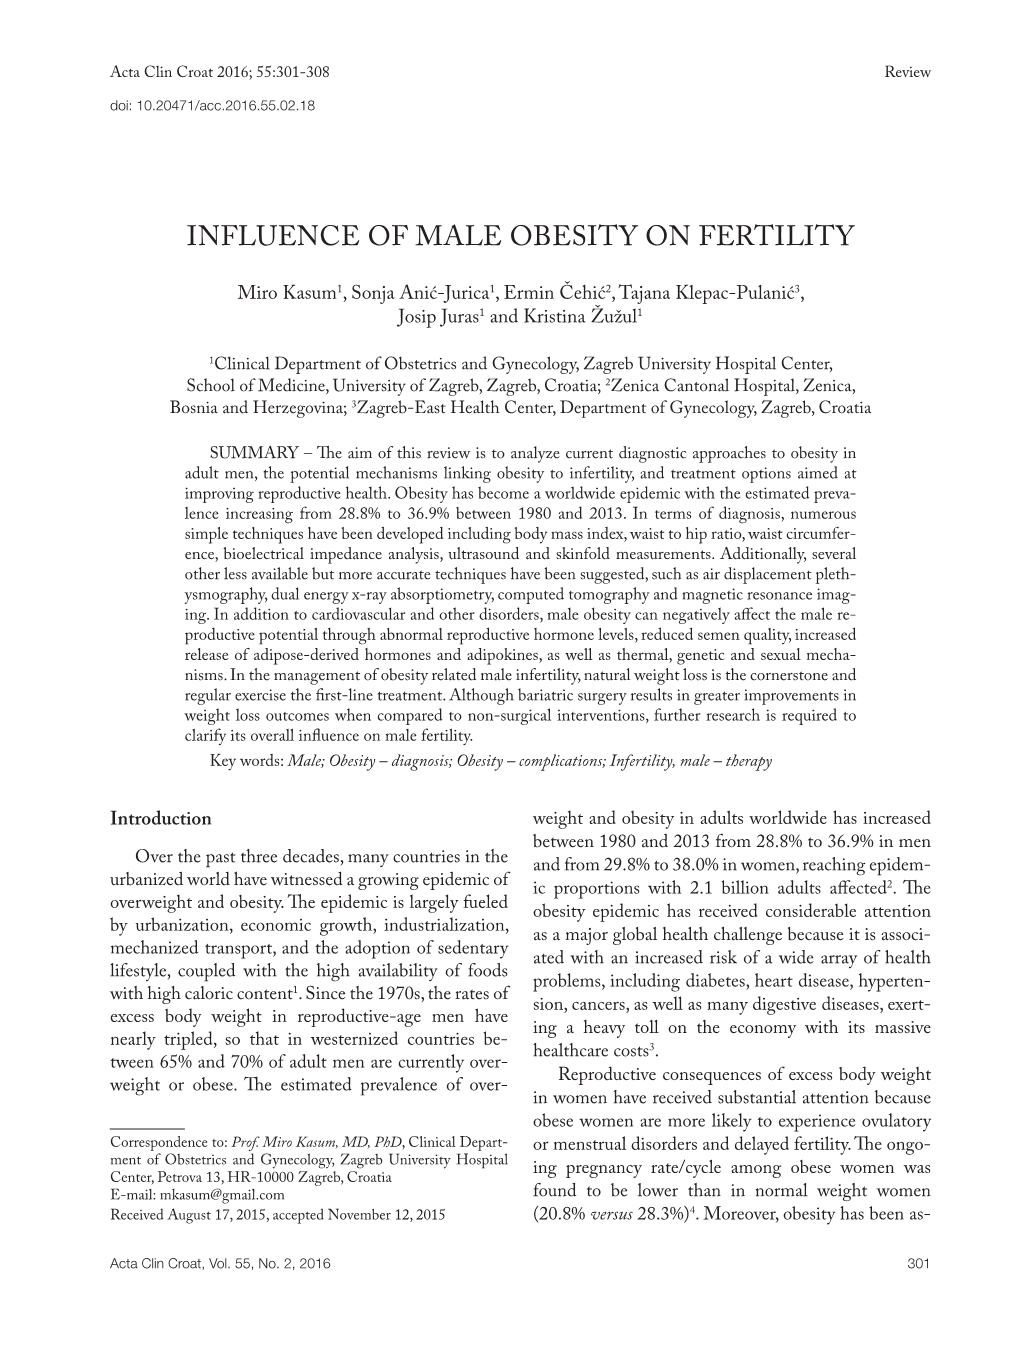 Influence of Male Obesity on Fertility